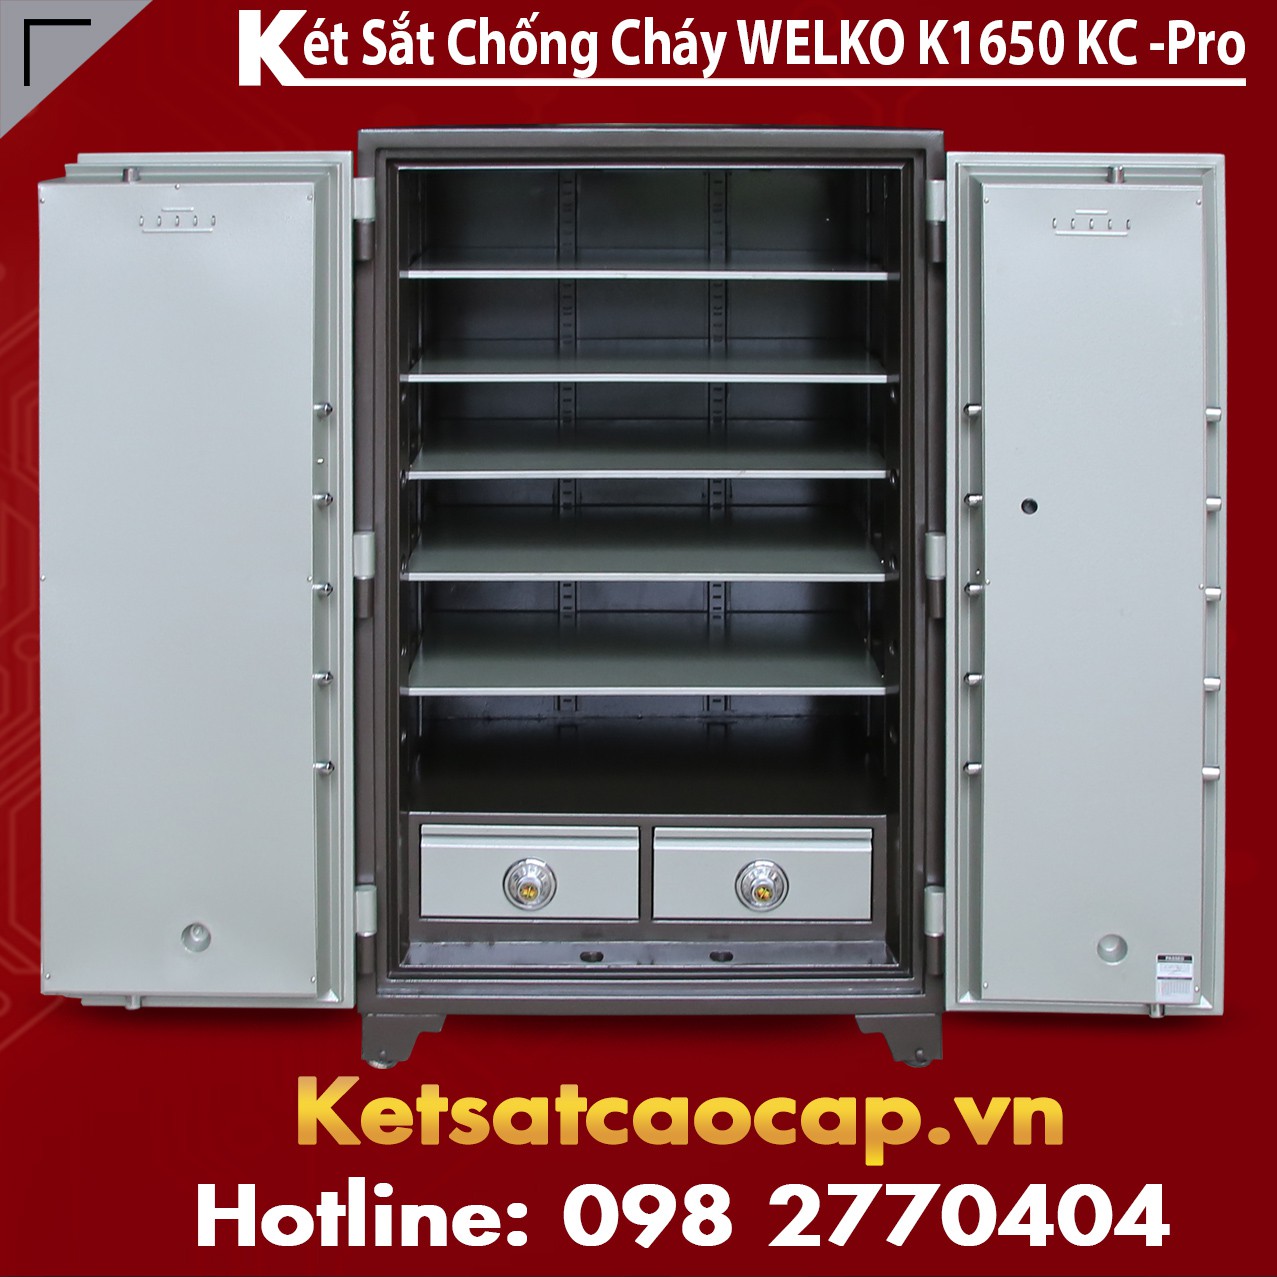 Ket Sat Chong Chay Welko K1650 KC - Pro